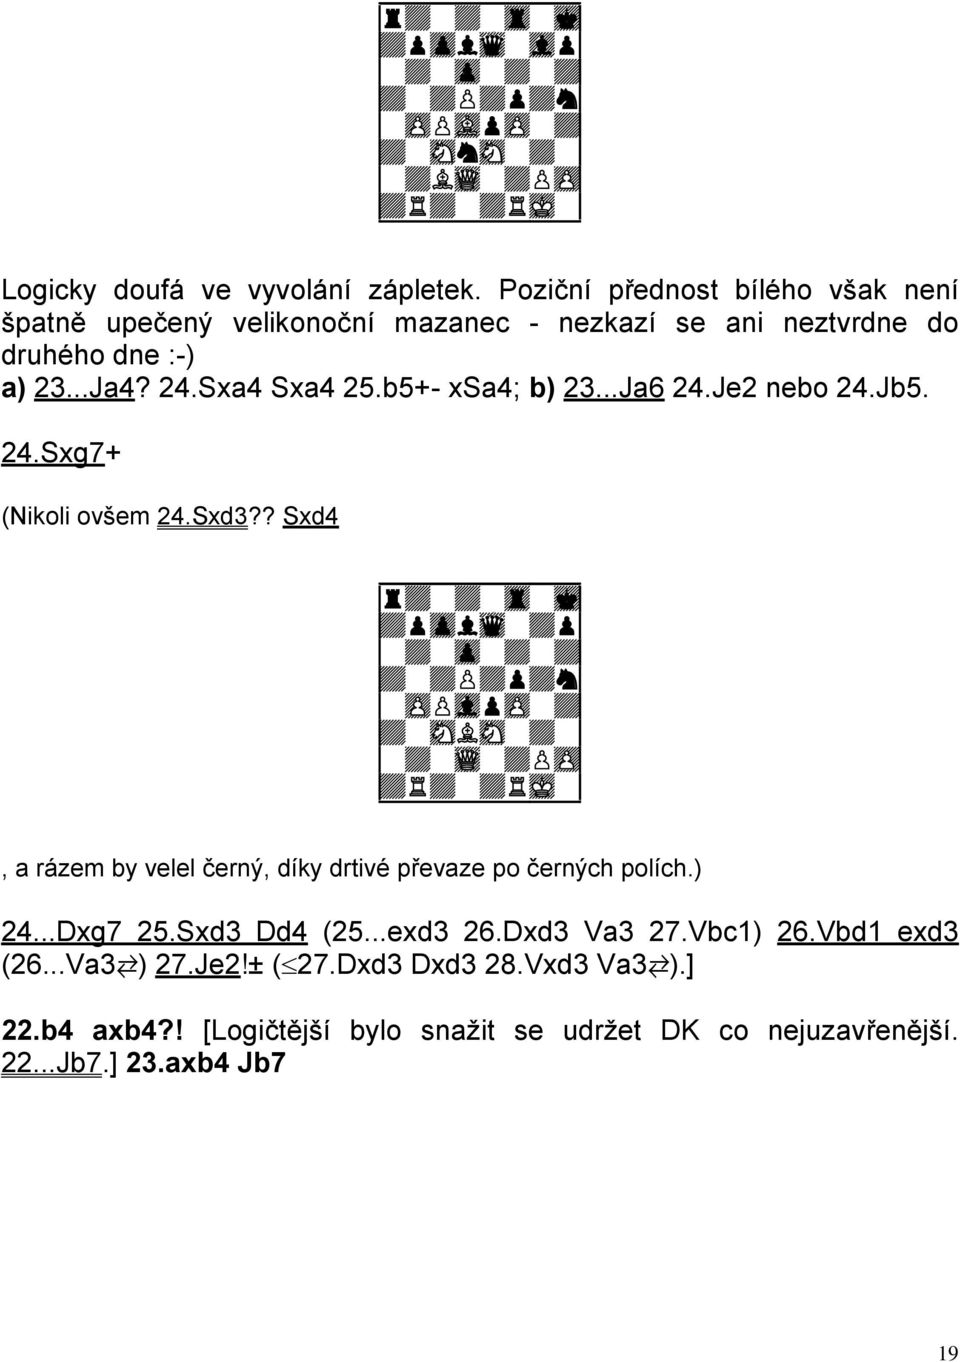 24.Sxg7+ (Nikoli ovšem 24.Sxd3?